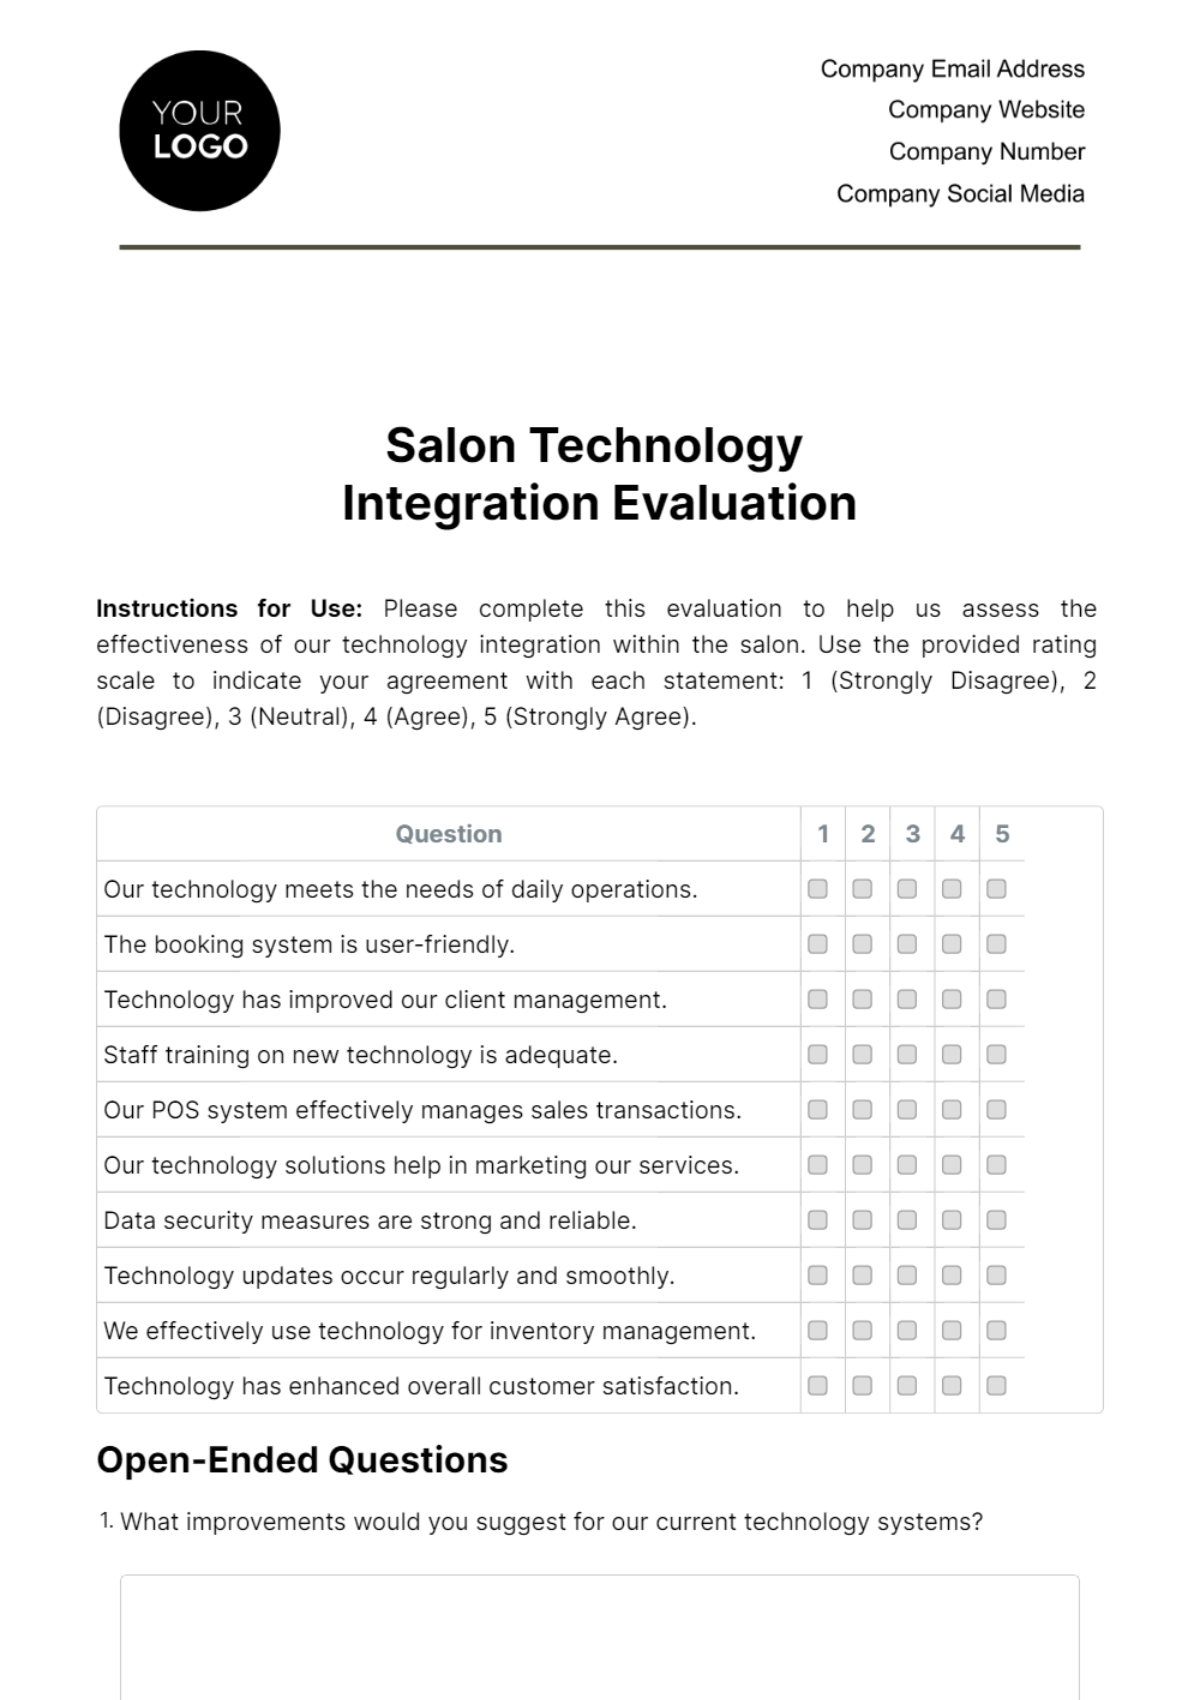 Free Salon Technology Integration Evaluation Template